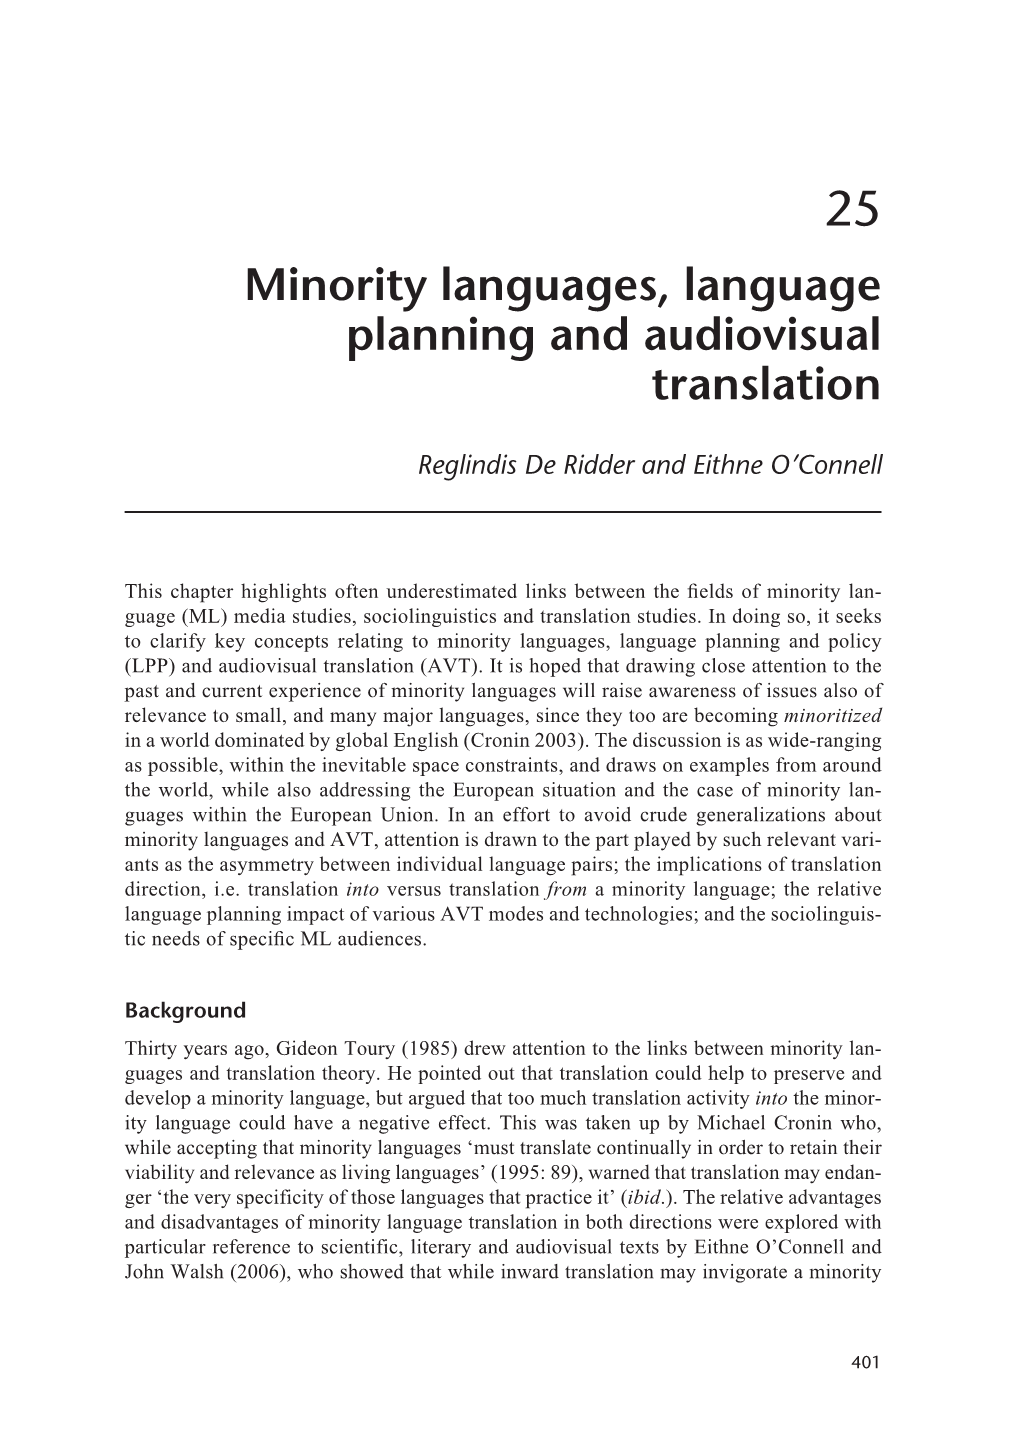 Minority Languages, Language Planning and Audiovisual Translation